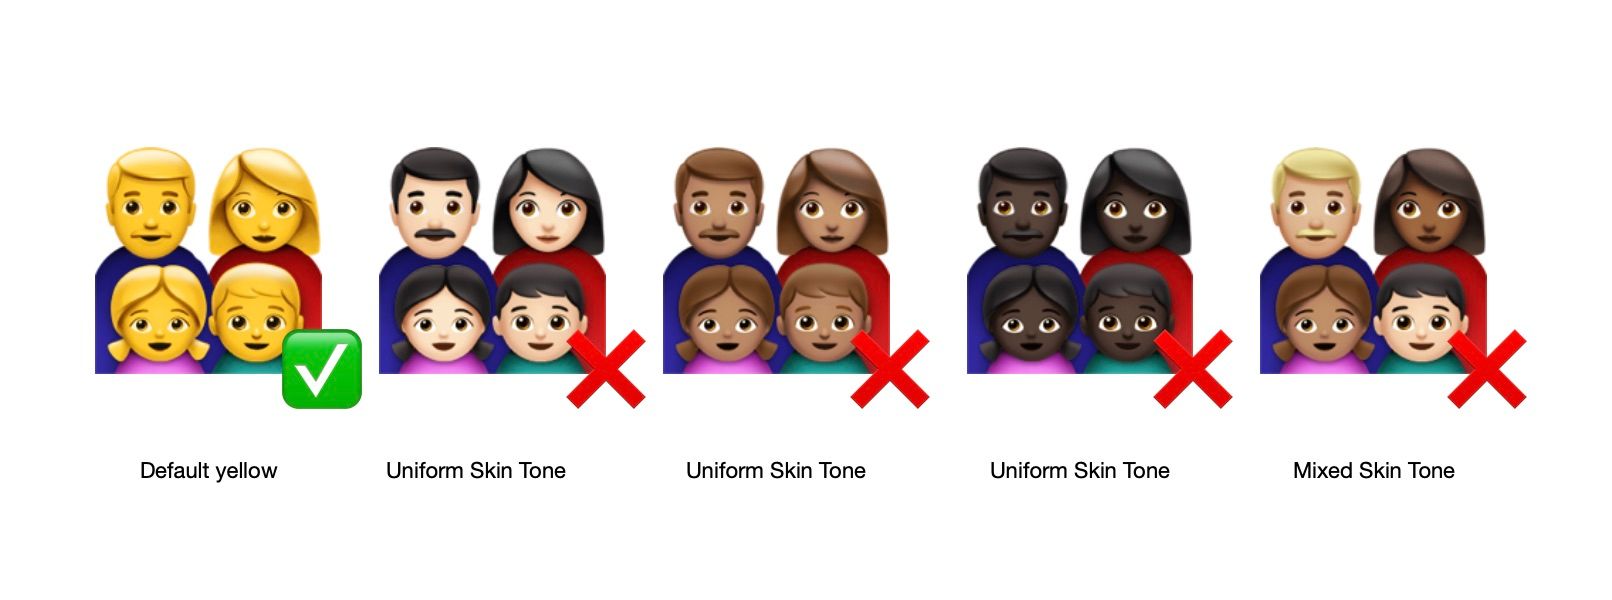 unicode-family-emoji-options-2020